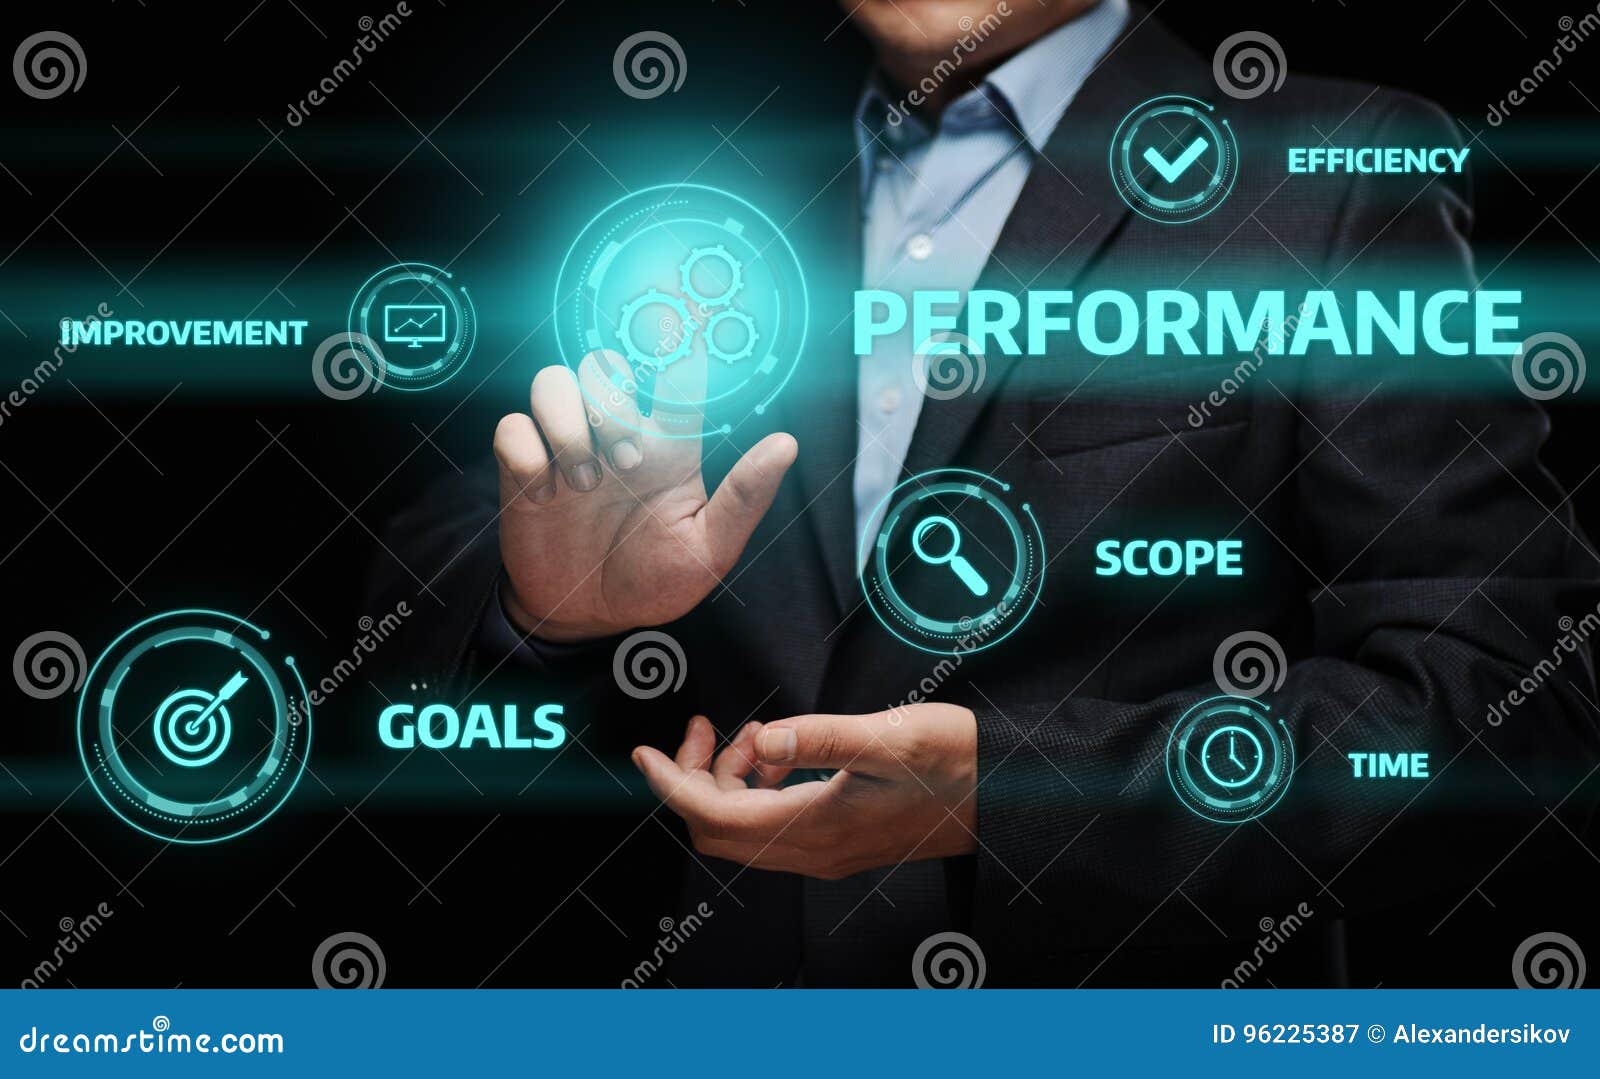 performance management efficiency improvement business technology concept